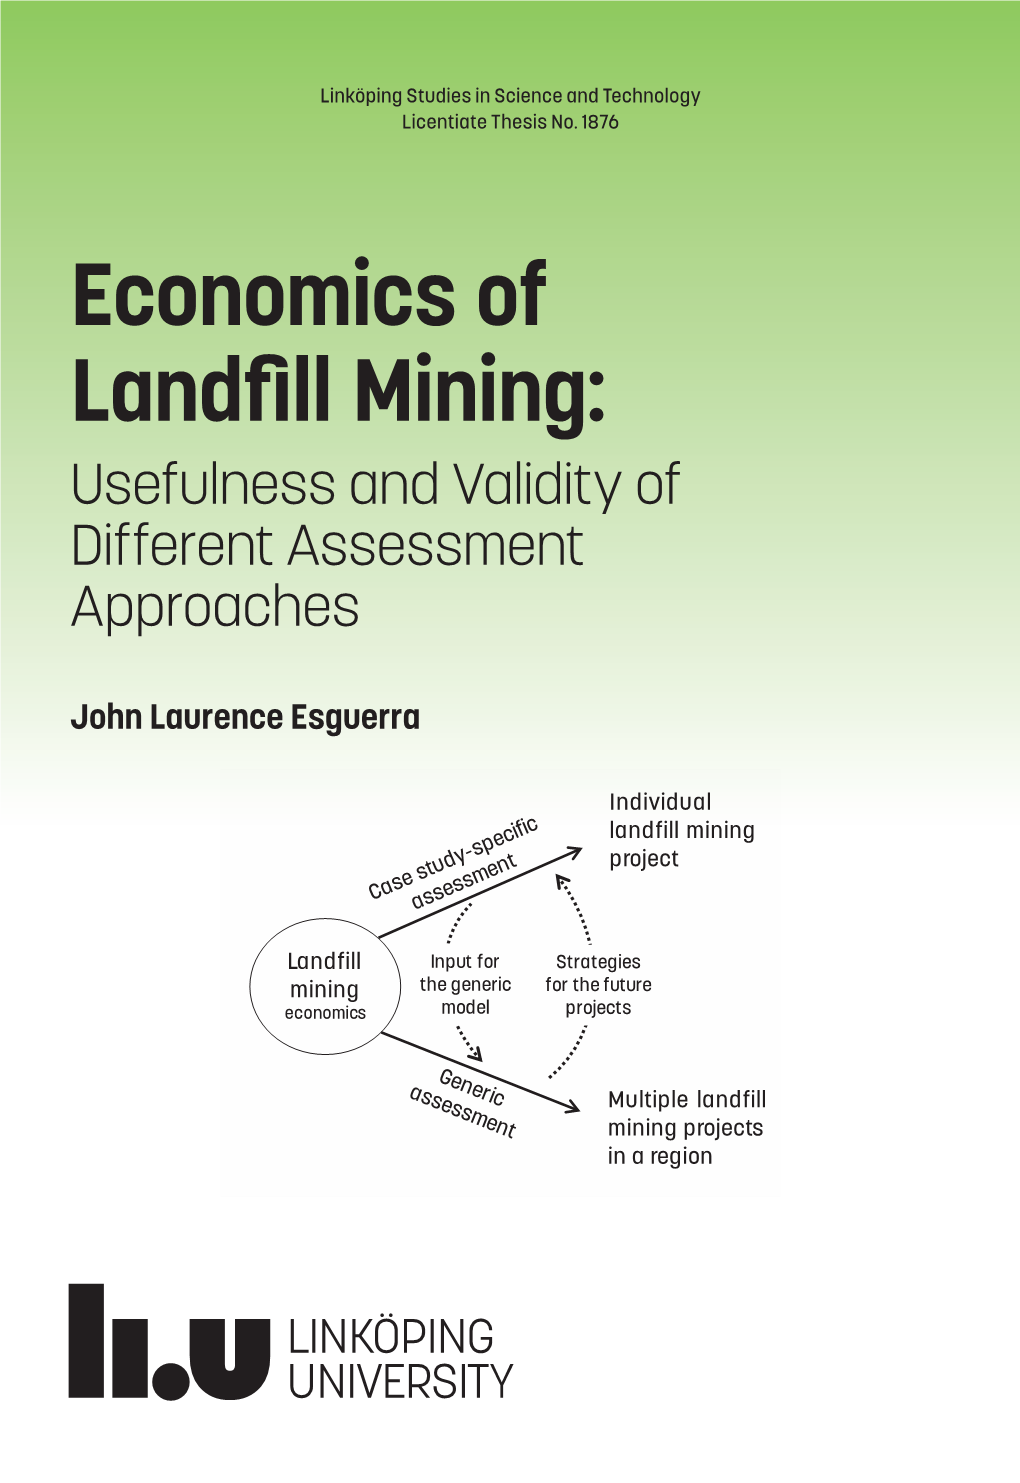 Economics of Landfill Mining